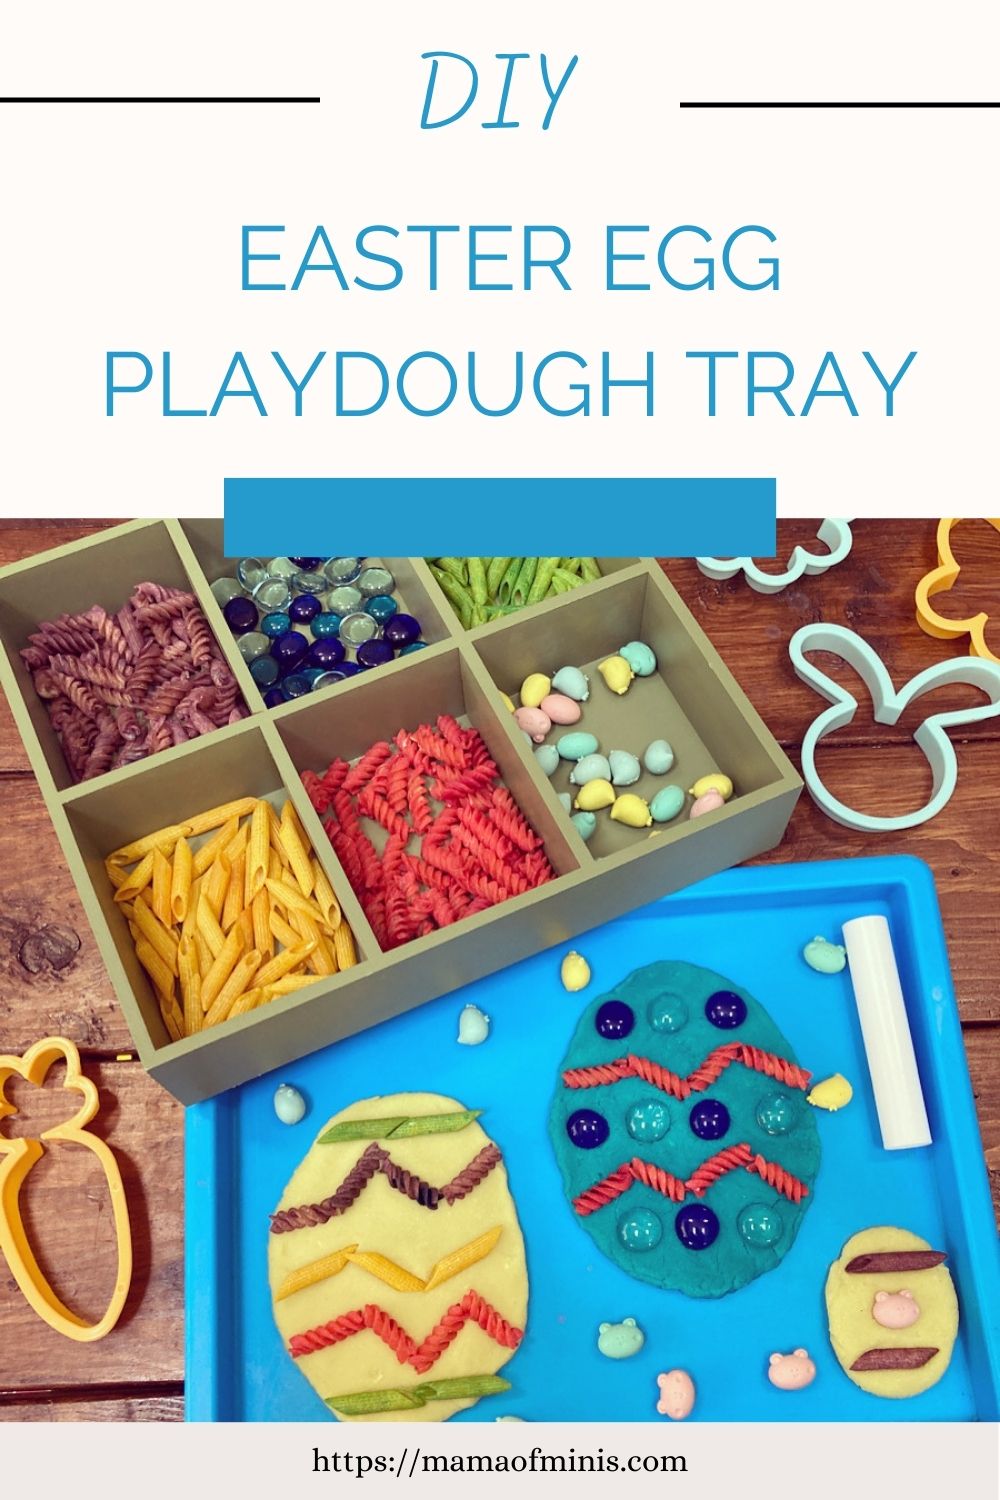 DIY Easter Egg Playdough Tray